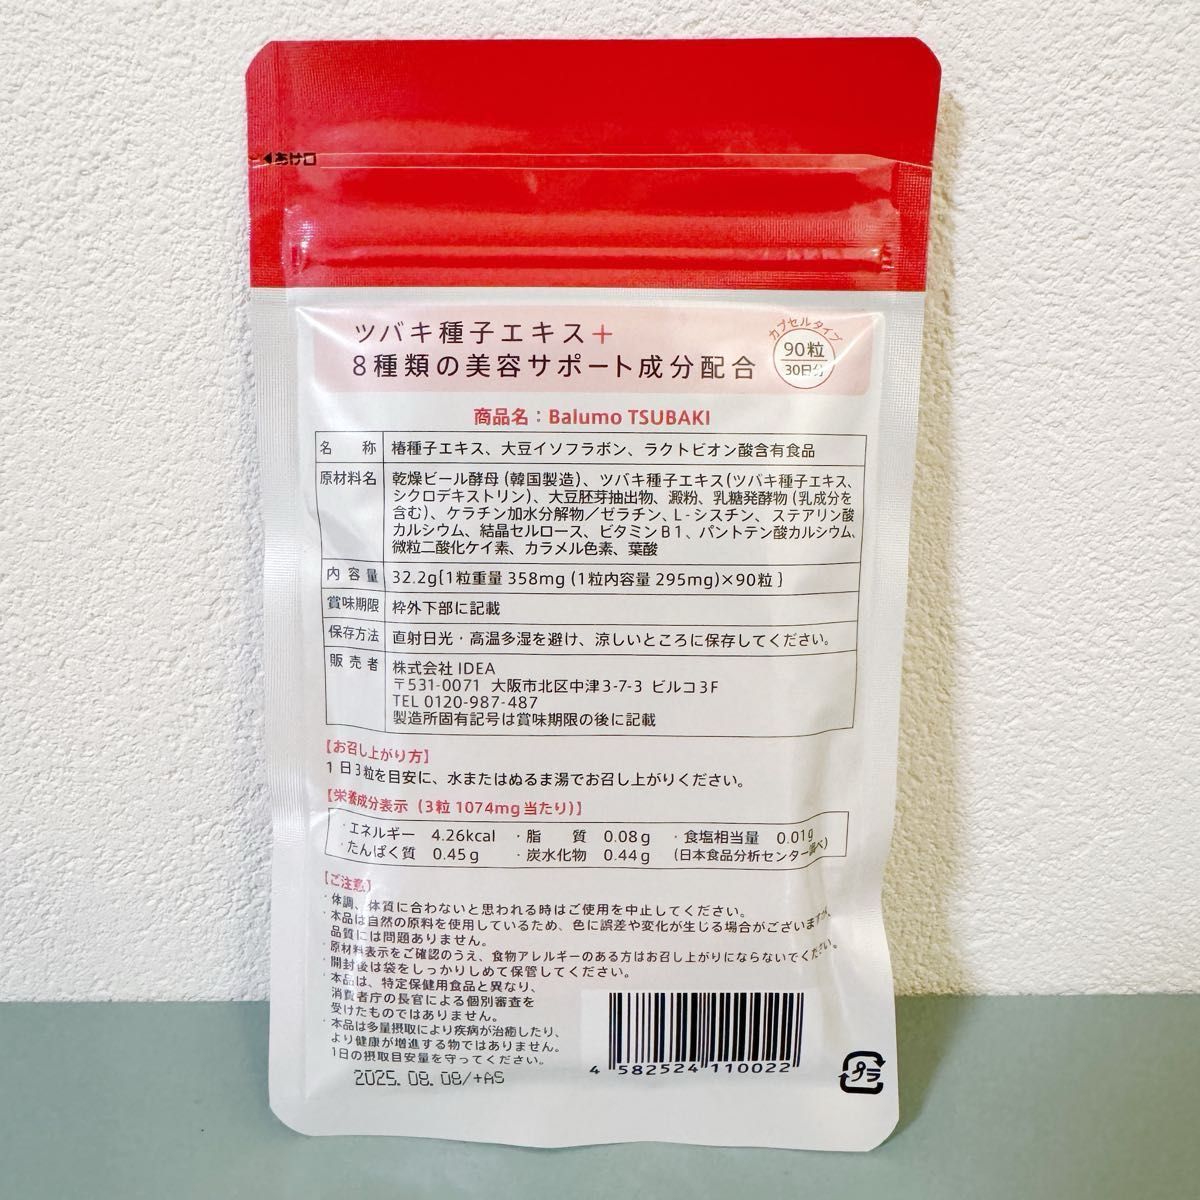 Balumo TSUBAKI バルモツバキ  5袋セット